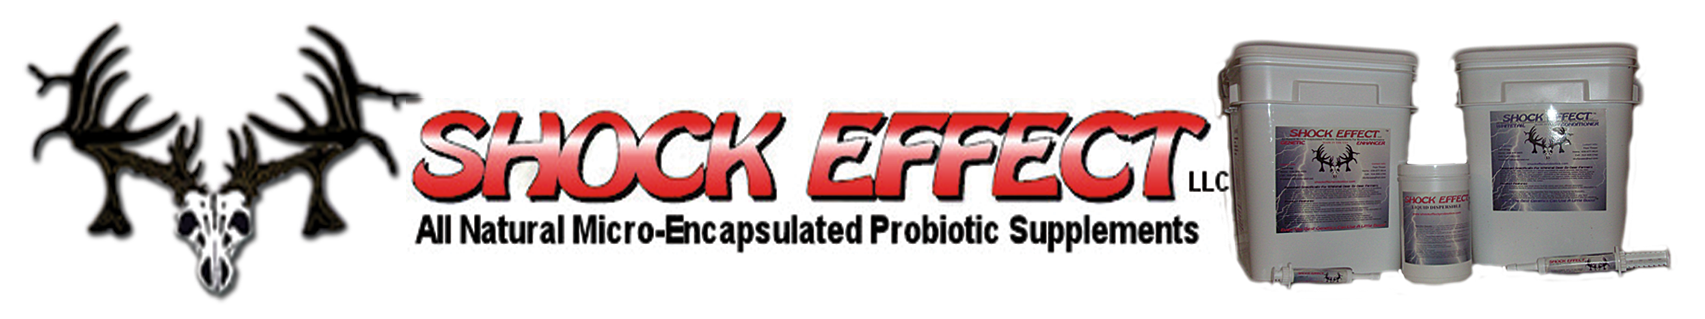 Shock Effect Probiotics